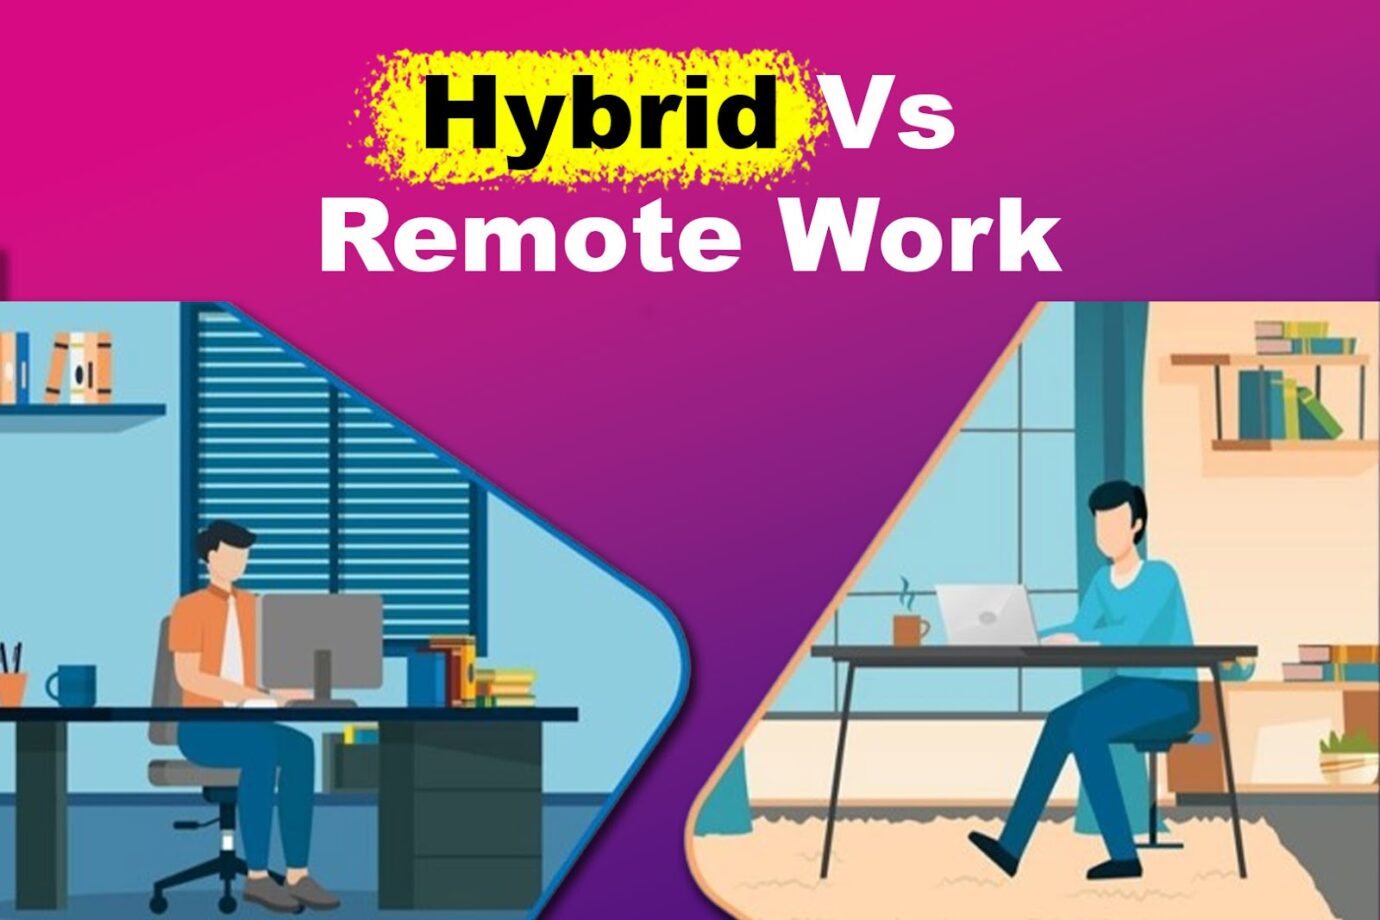 Hybrid vs Remote Work